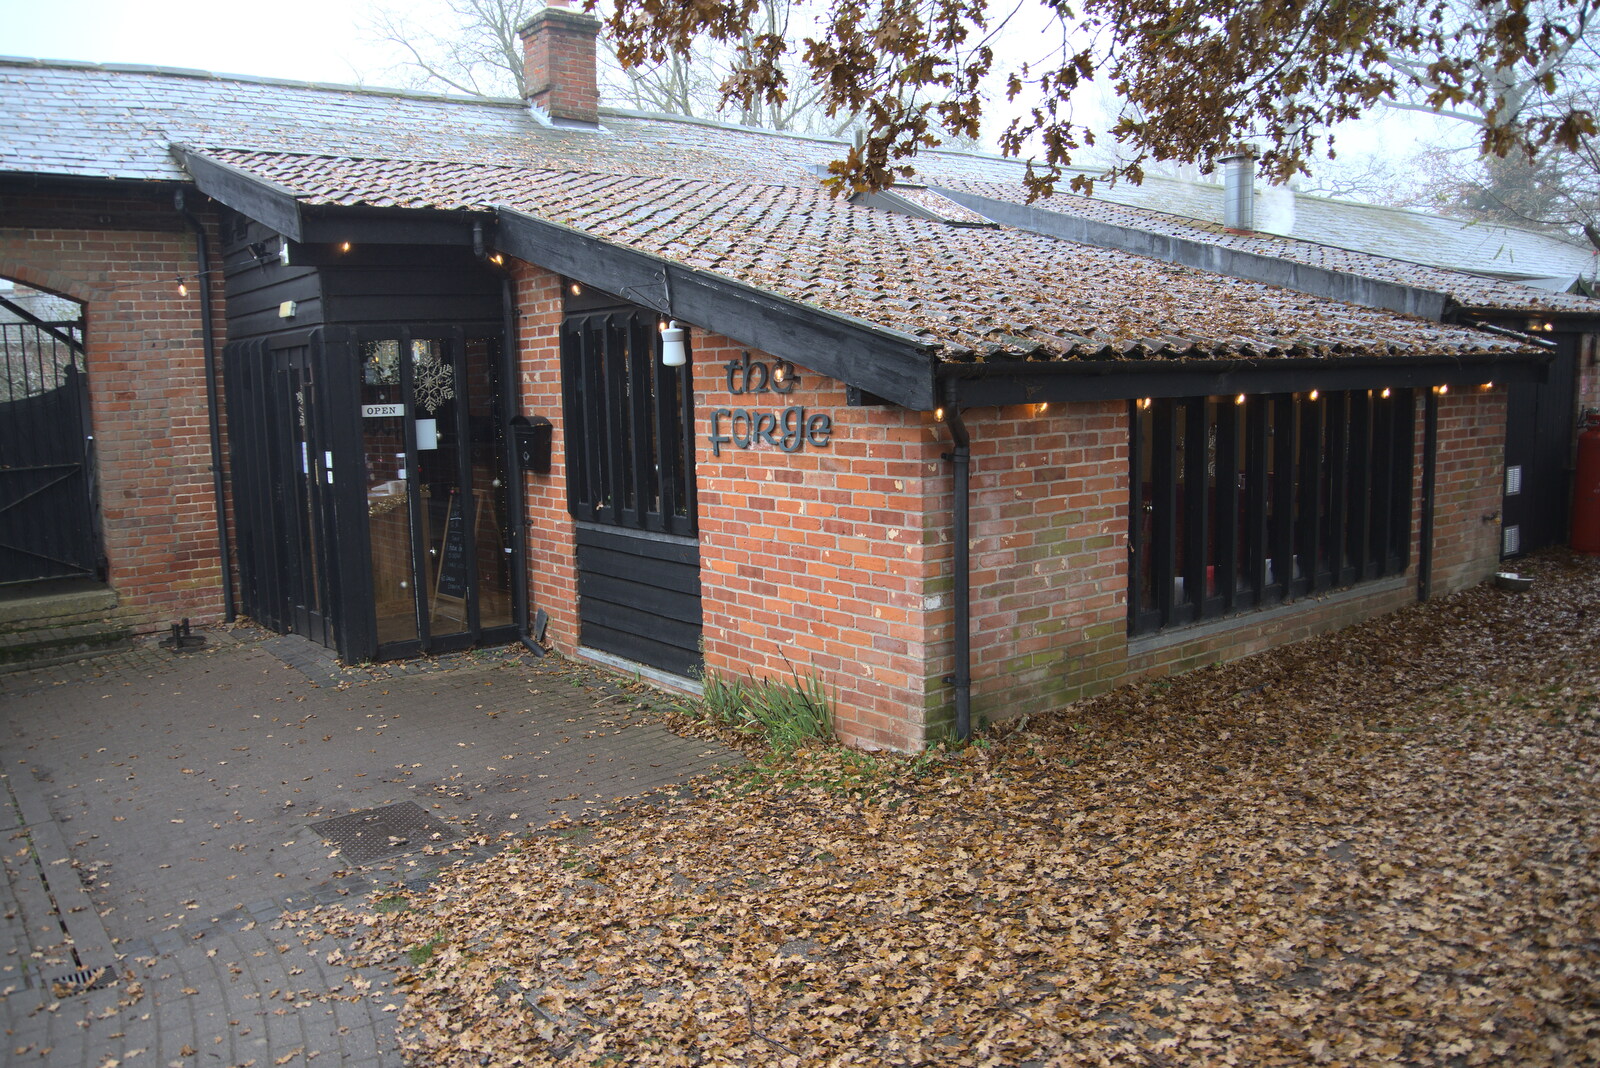 The Forge Café from A Return to Thornham Walks, Thornham, Suffolk - 19th December 2021